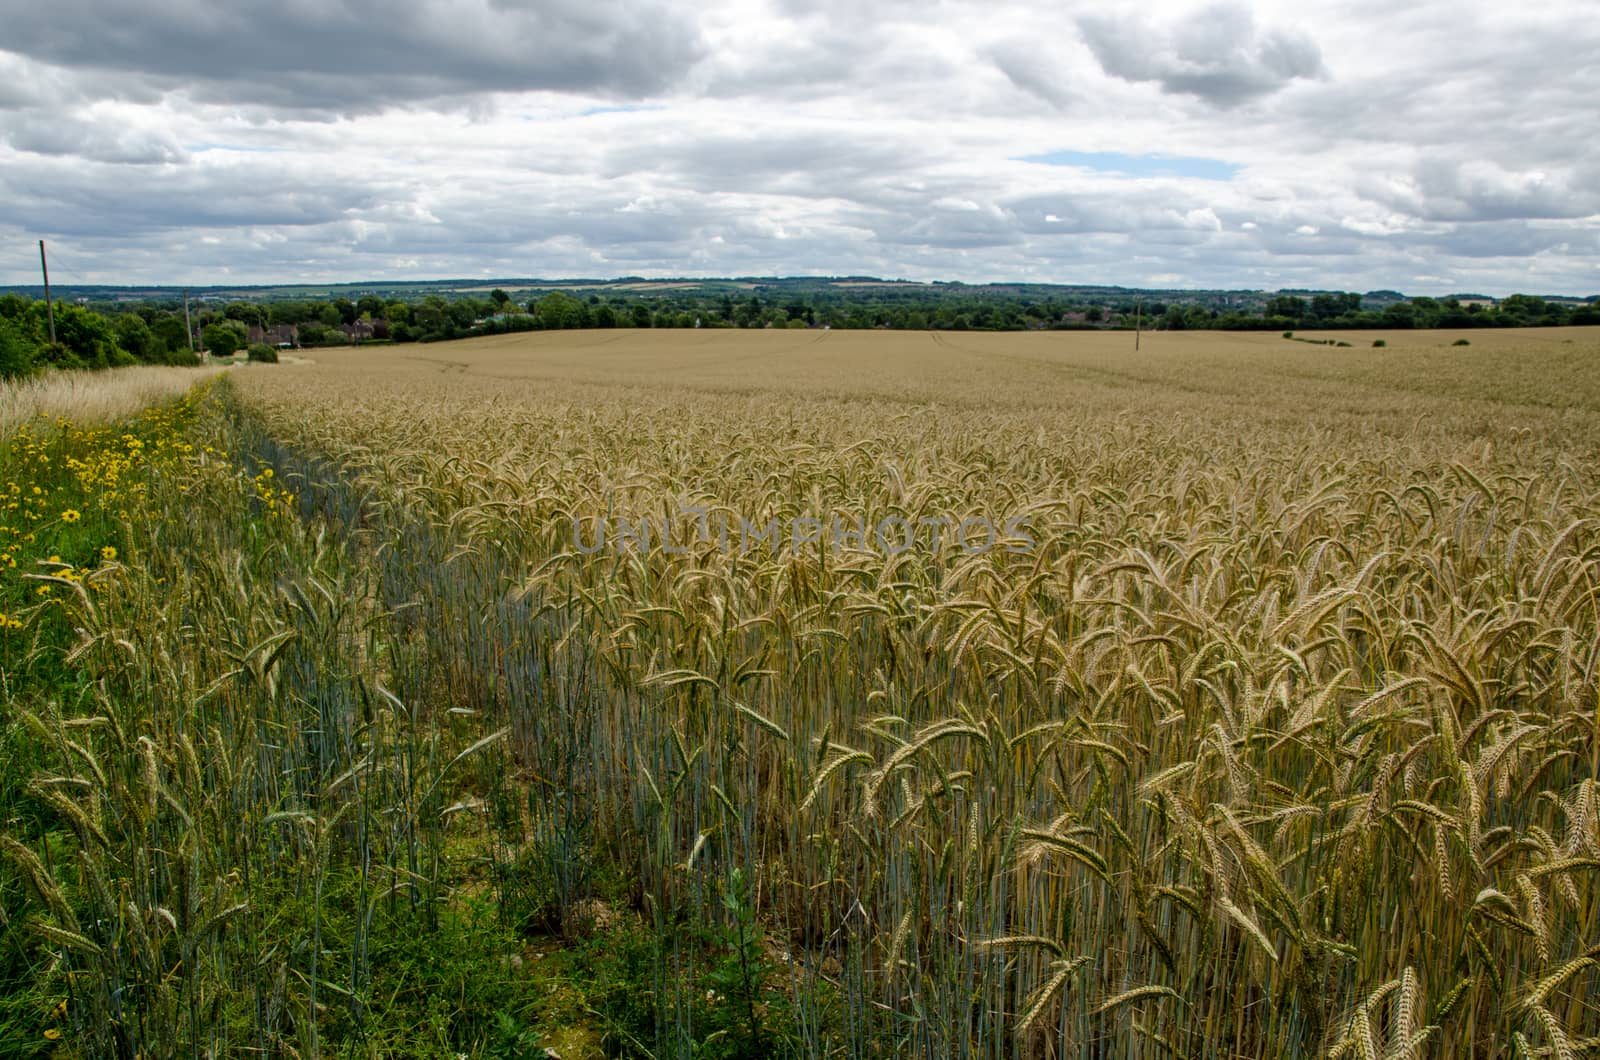 View across cornfield towards Basingstoke, Hampshire by BasPhoto